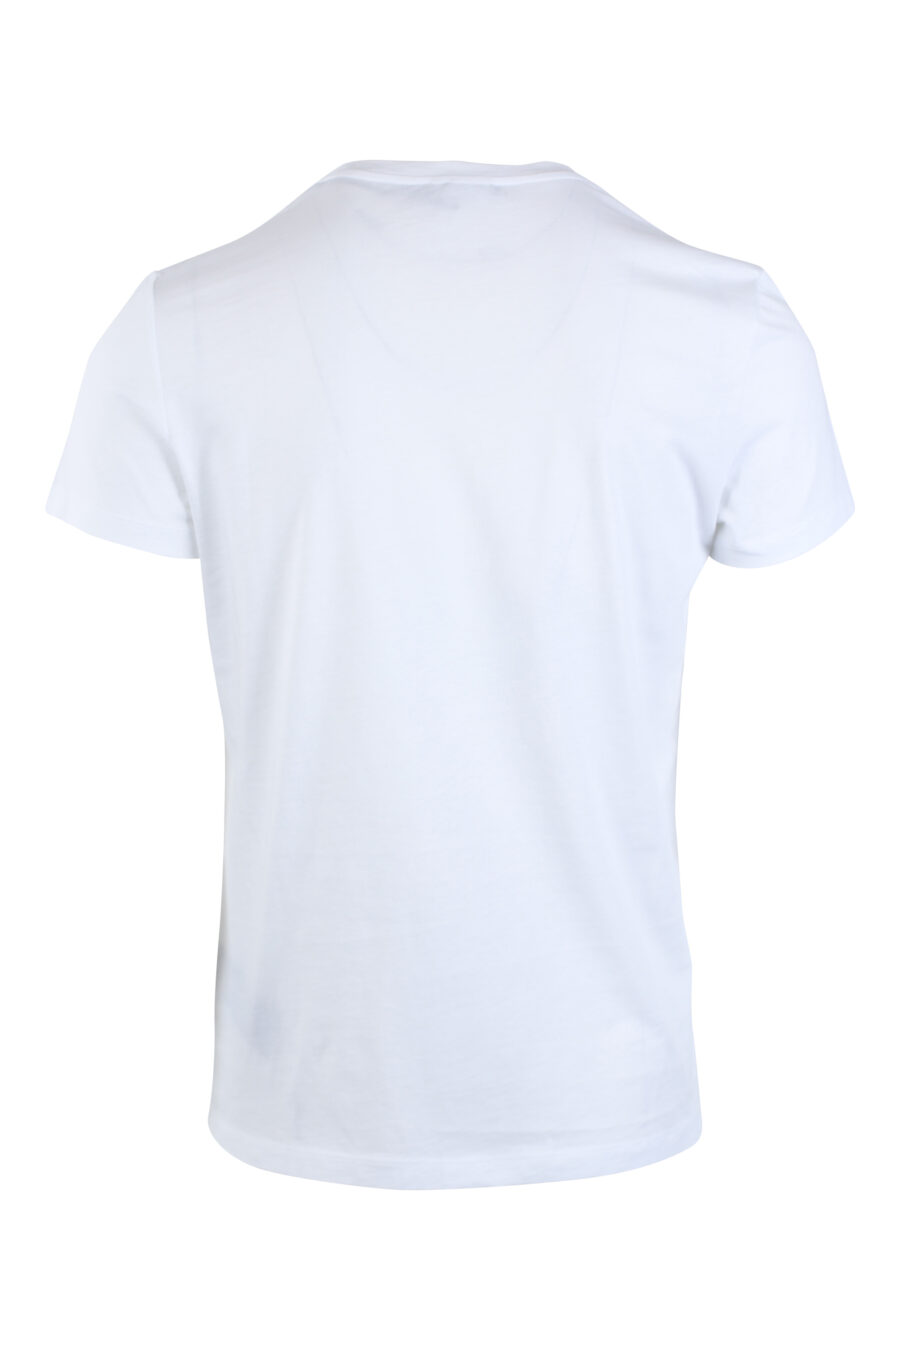 Weißes T-Shirt mit goldenem Maxilogo "paris" - IMG 2613 1